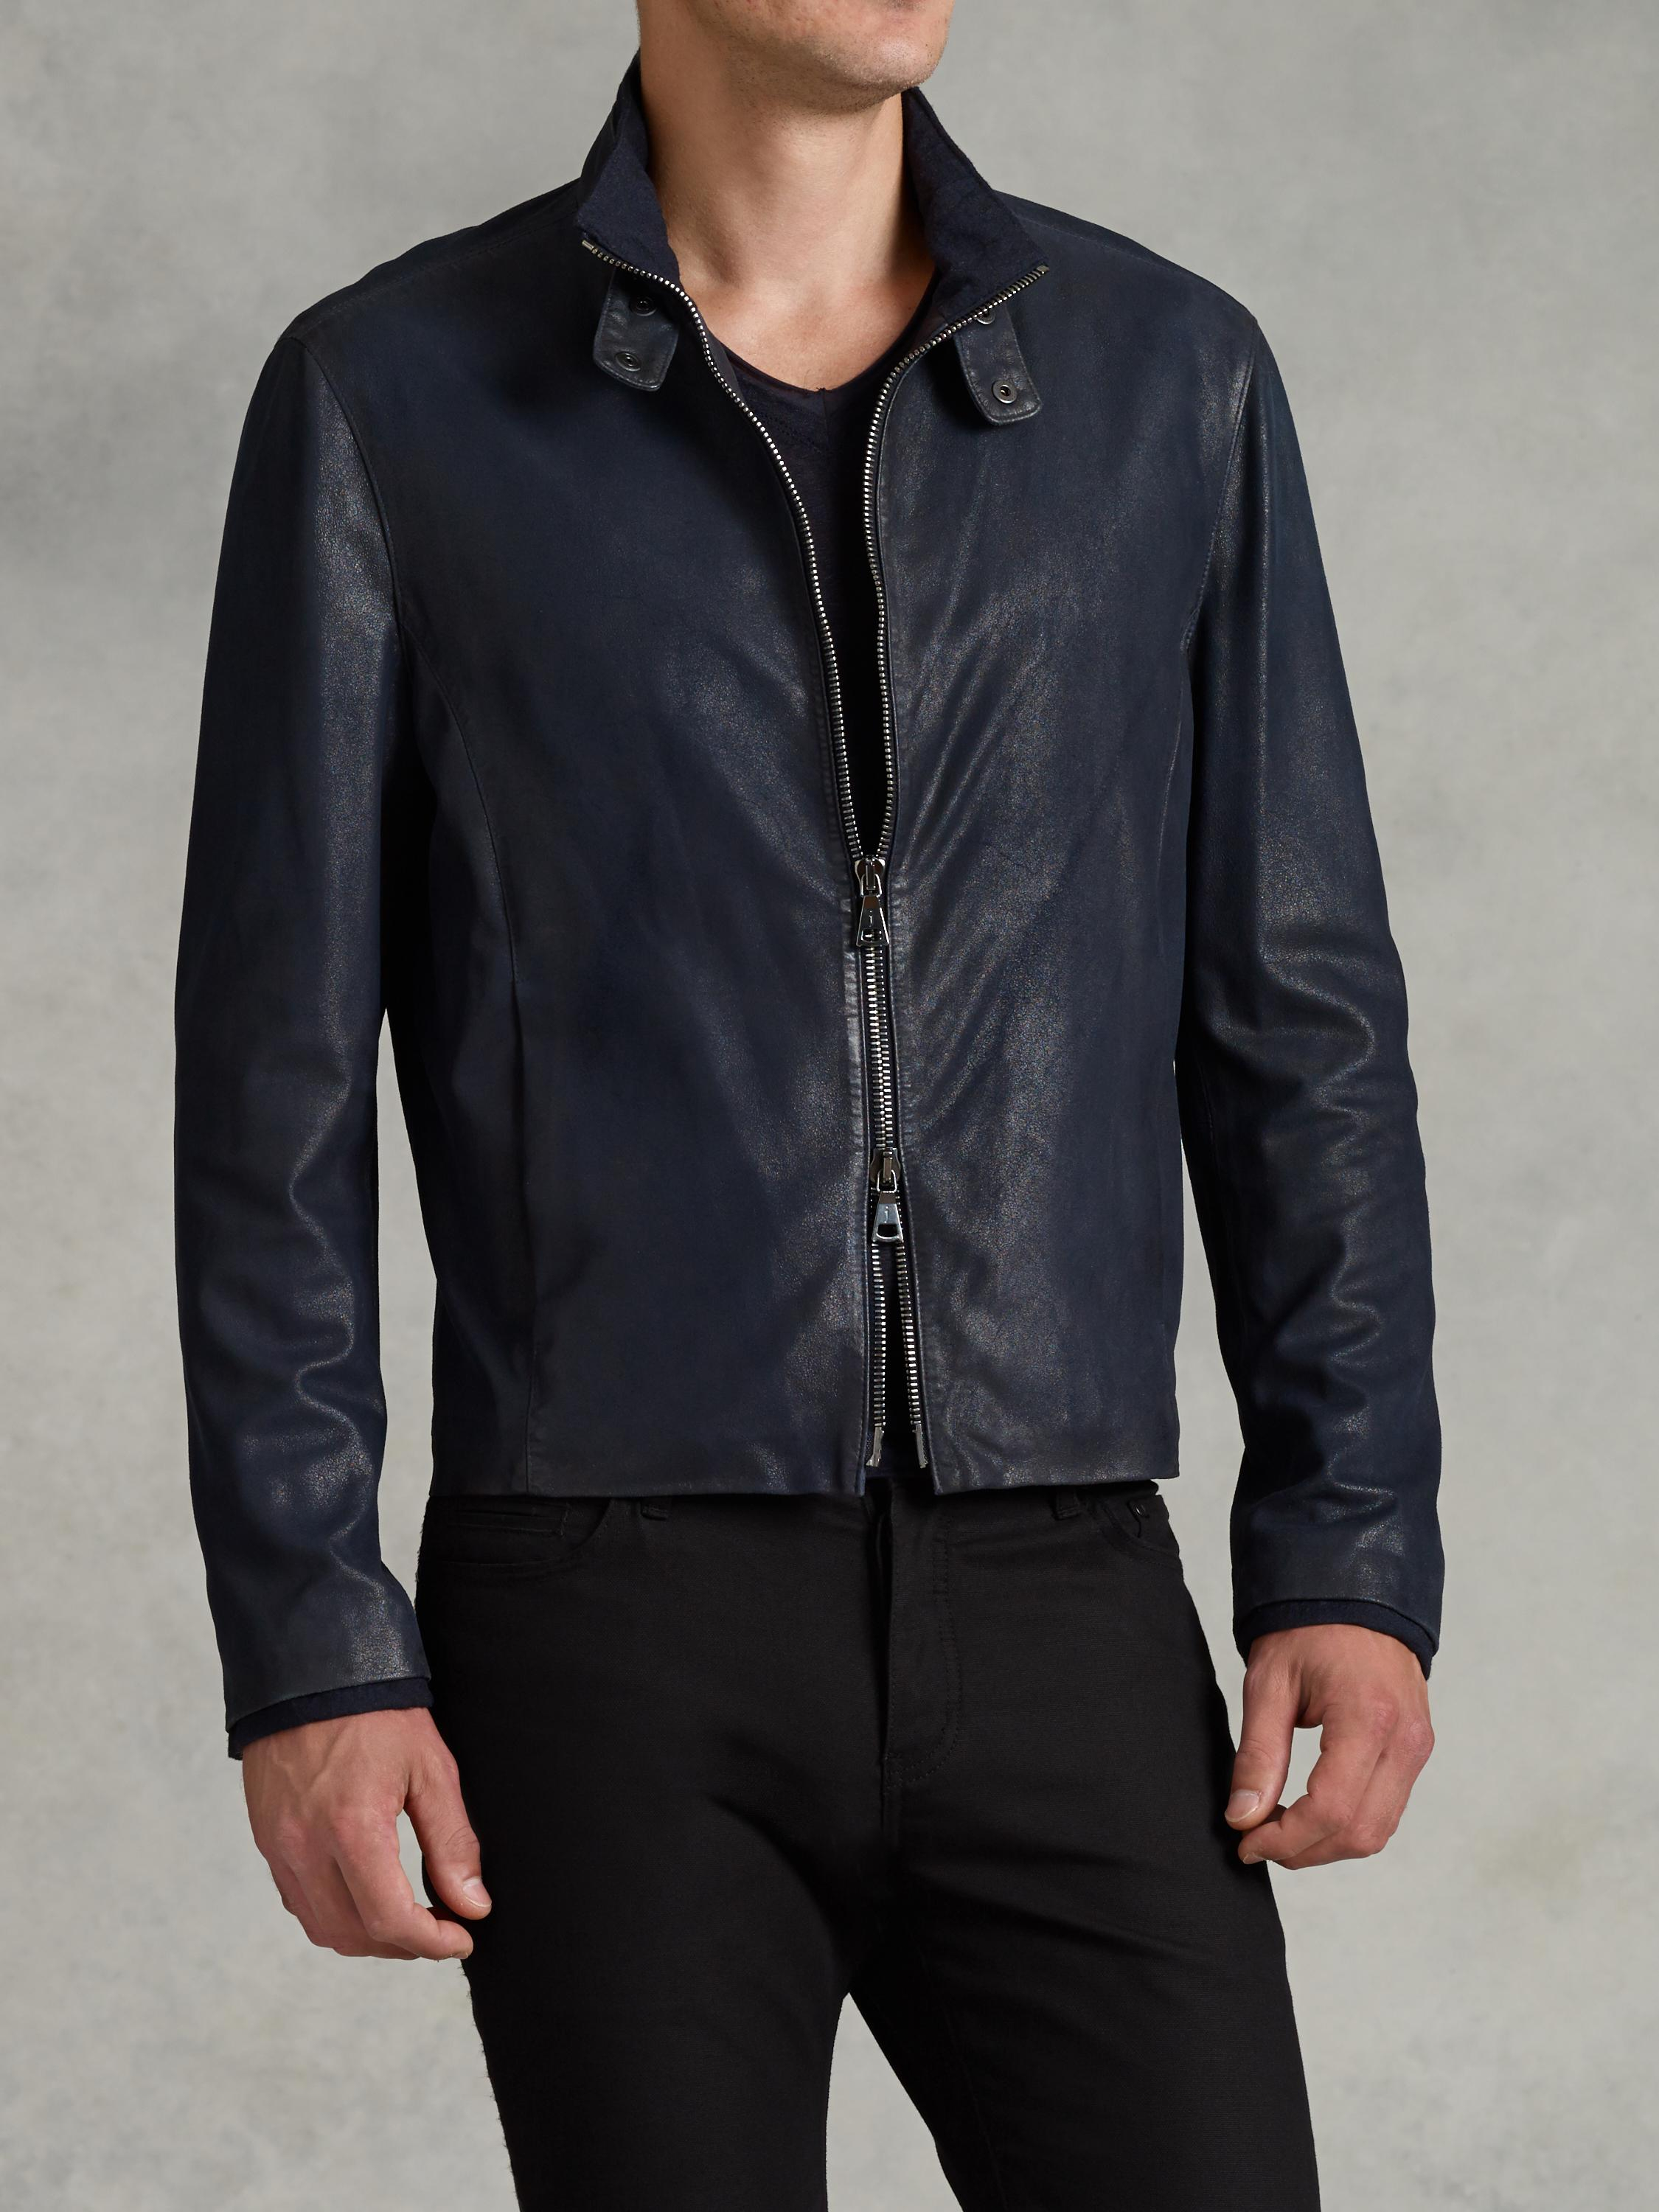 John Varvatos Zip Front Leather Jacket in Blue for Men - Lyst